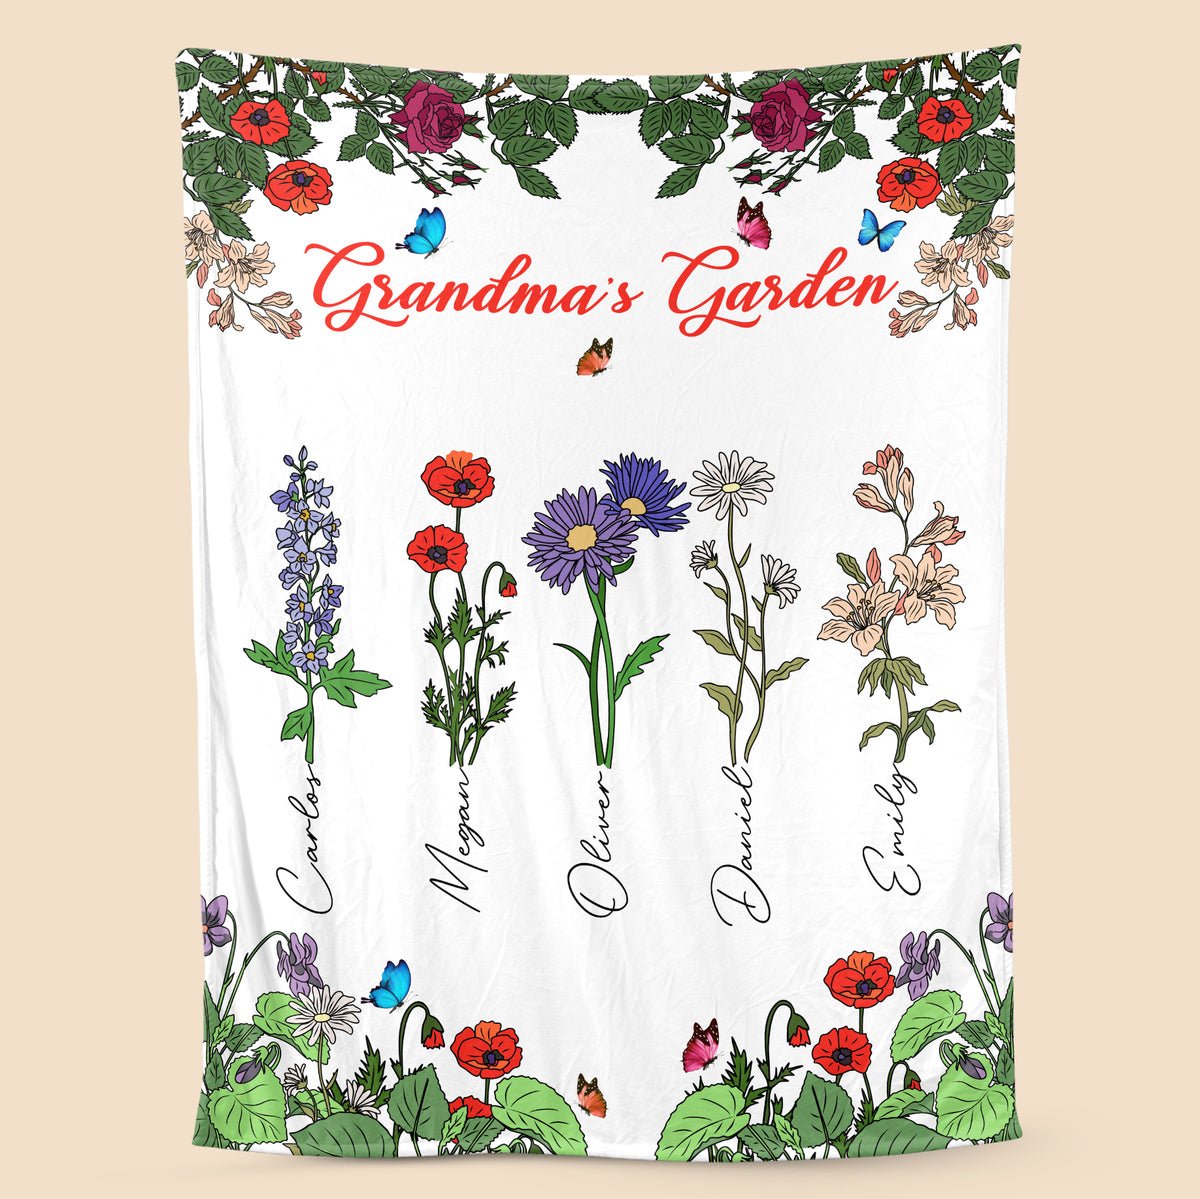 https://cdn.shopify.com/s/files/1/0640/1861/2460/products/momgrandmas-garden-birth-month-flower-version-3-personalized-blanket-best-gift-for-family-603903_2000x.jpg?v=1682521167